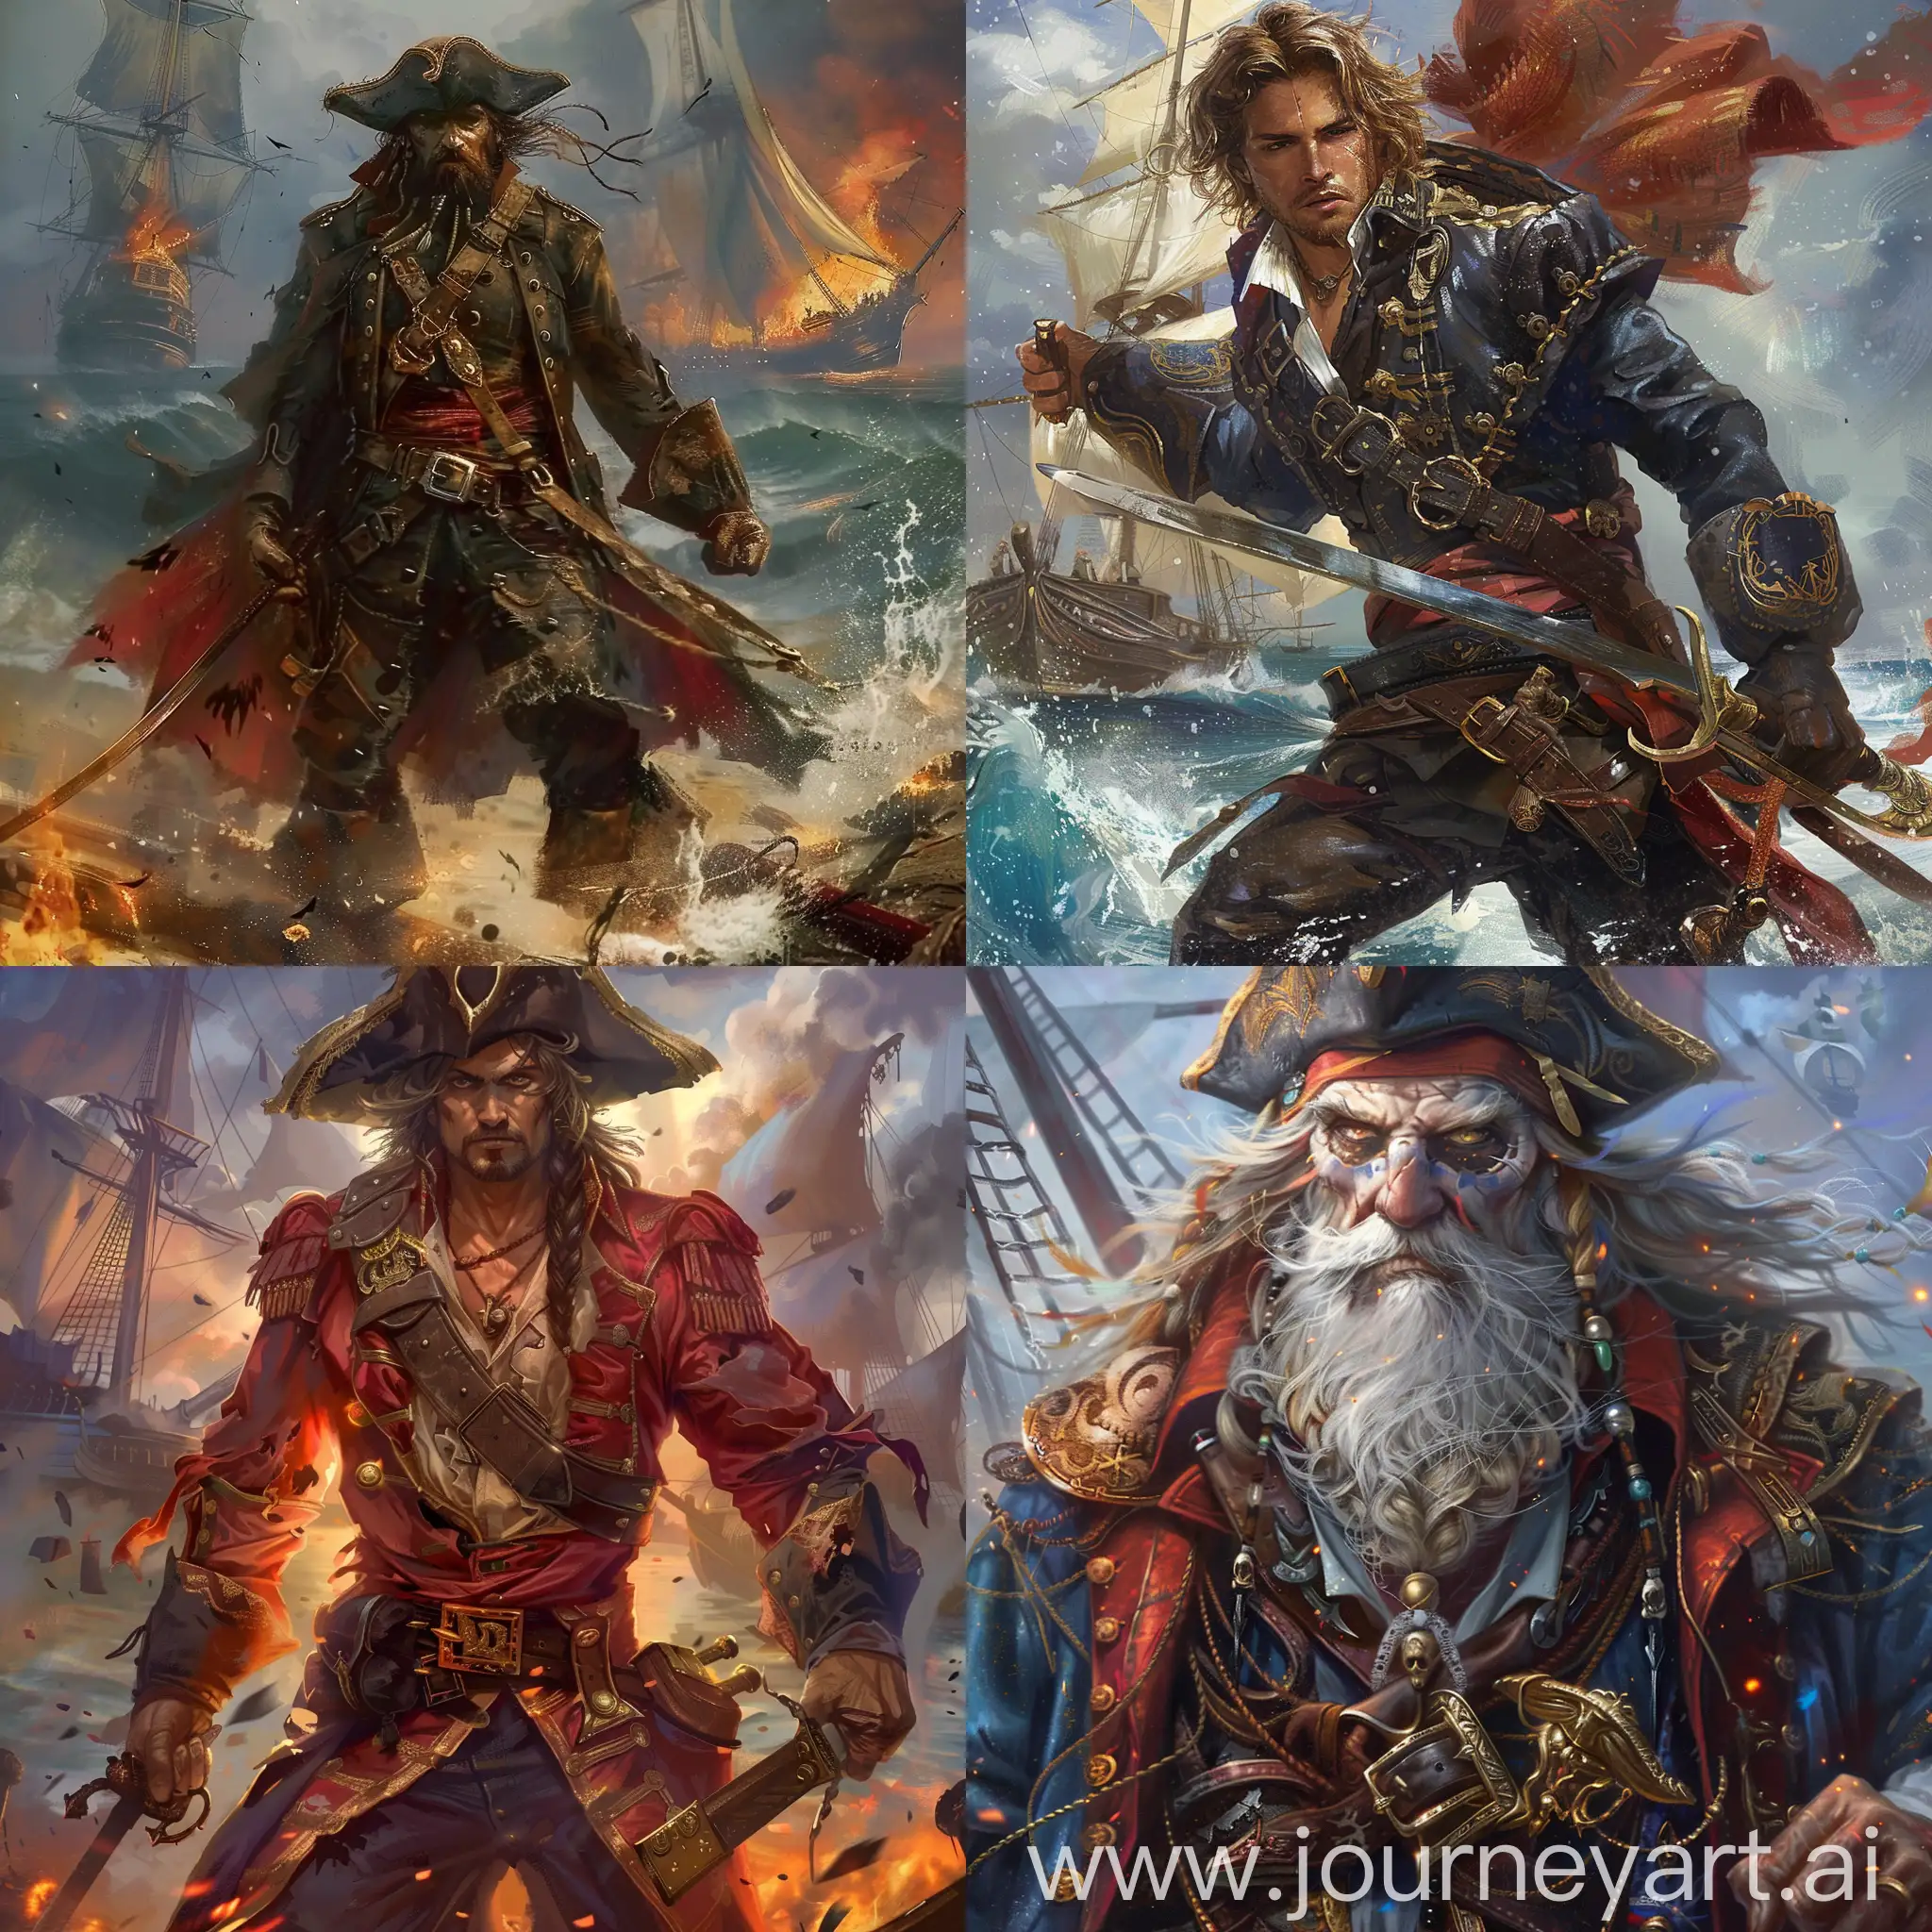 Epic-Pirate-Fantasy-Mysterious-Voyage-Across-Vast-Seas